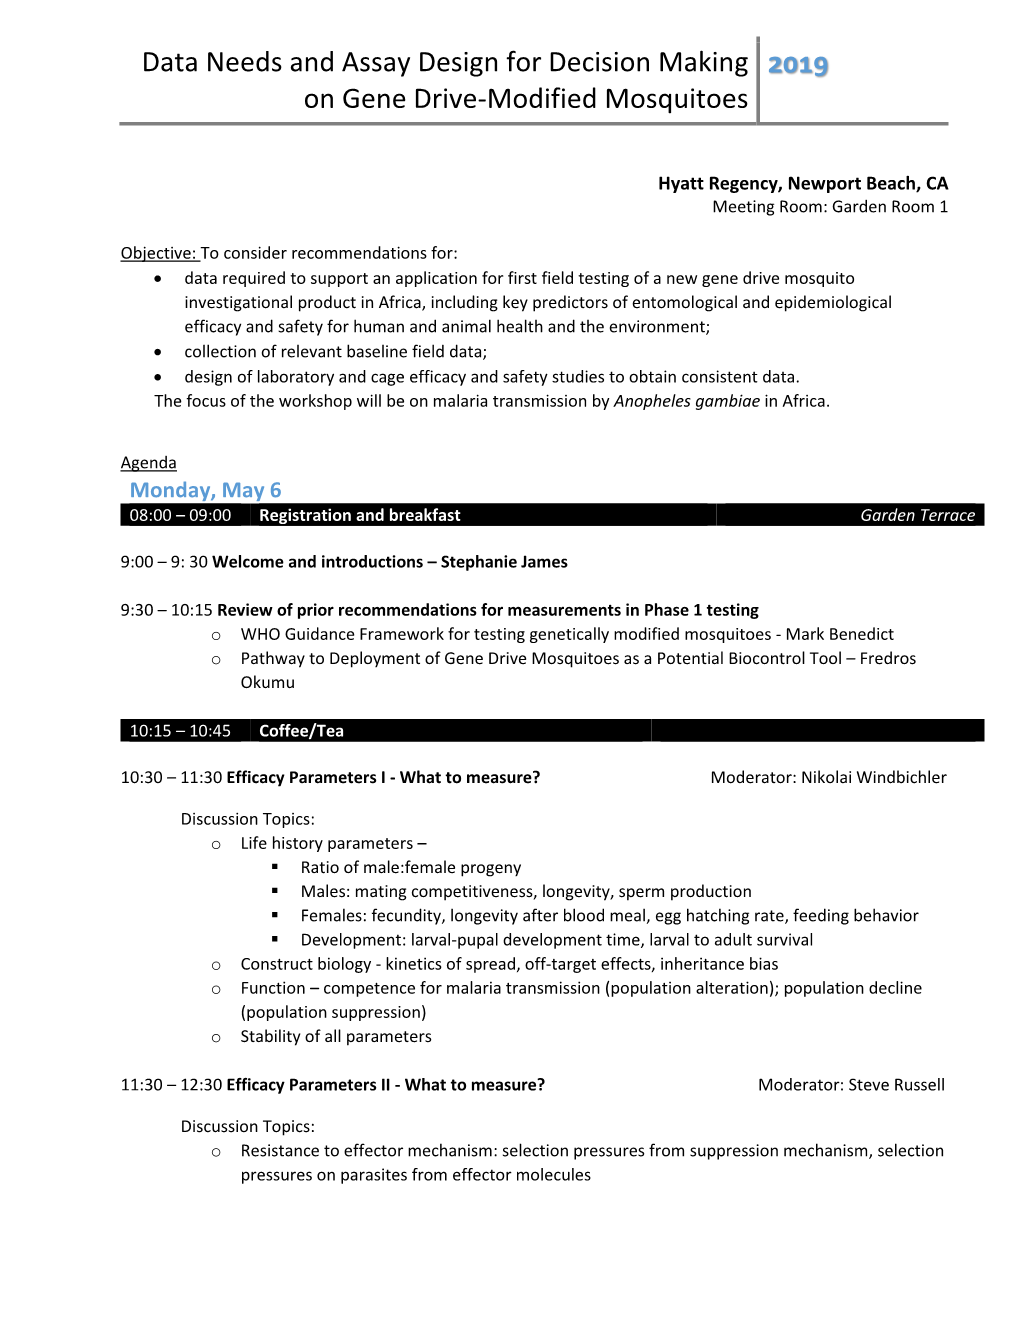 Agenda and Participant List